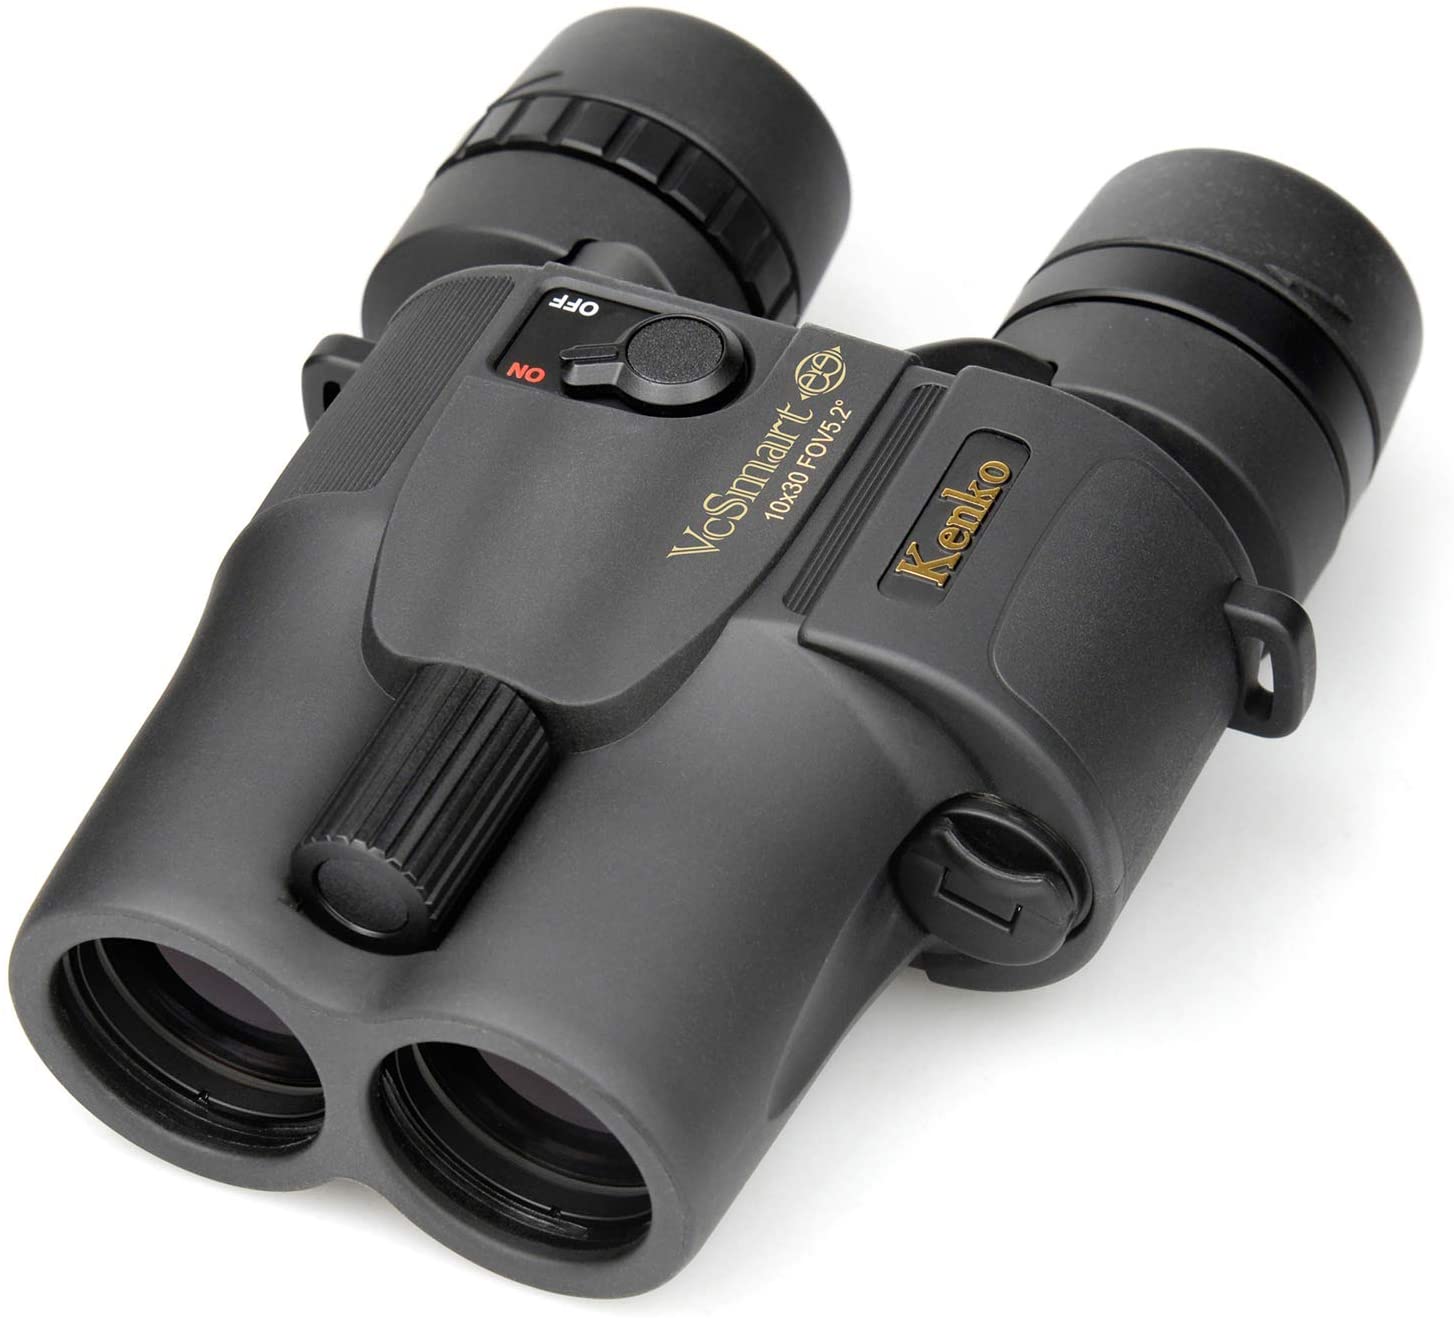 Kenko VcSmart 10x30 Image Stabilization Binoculars